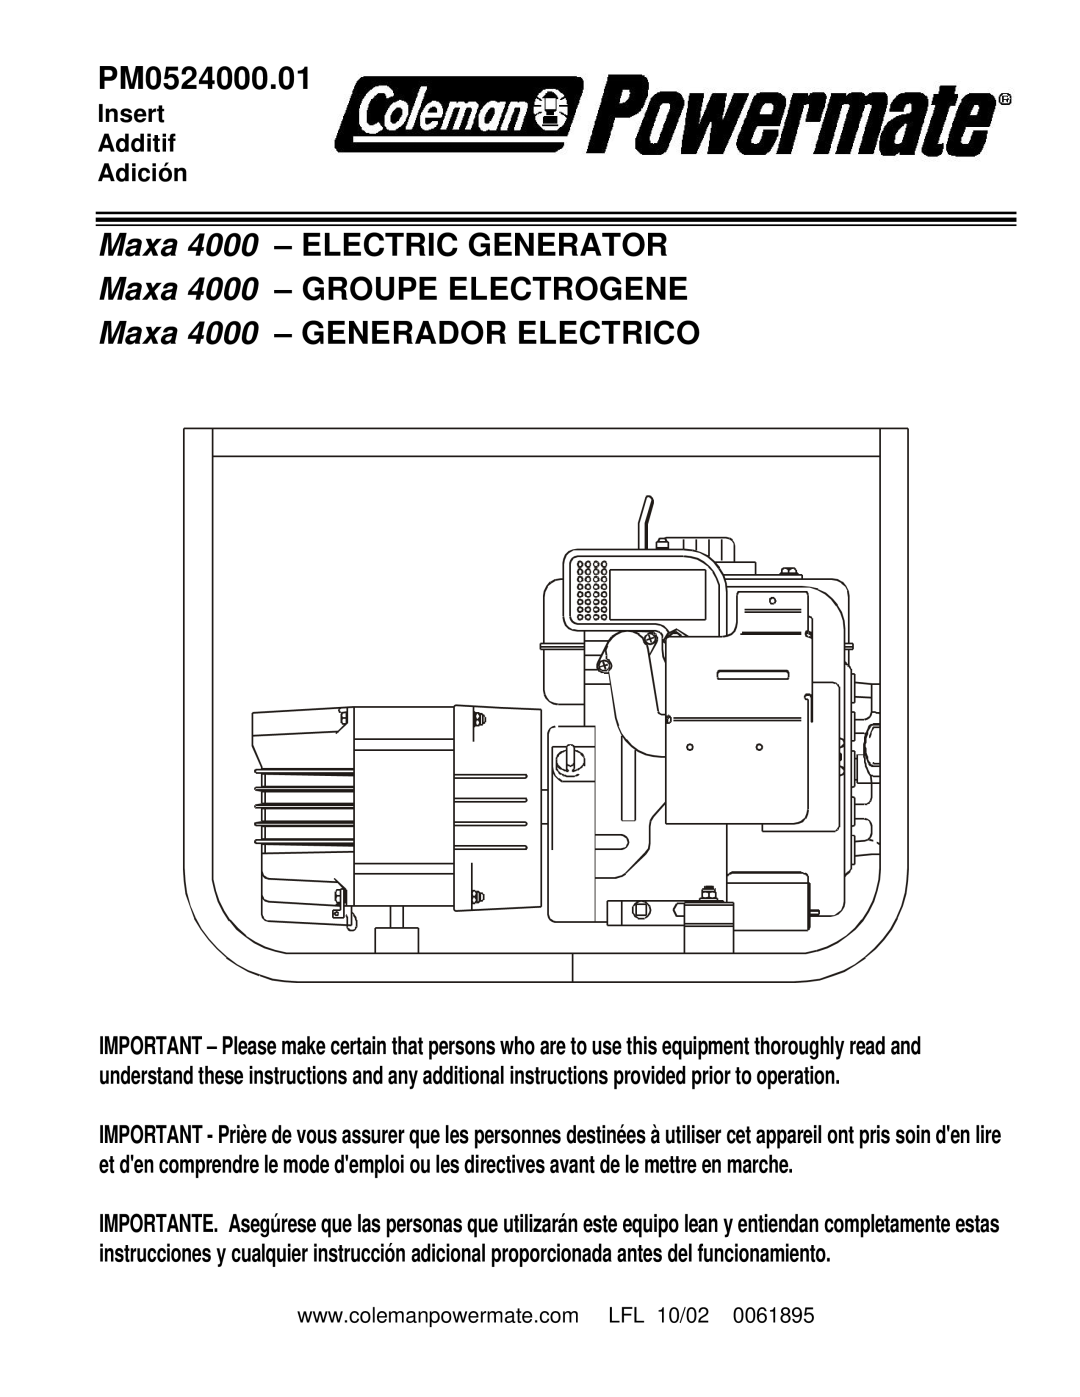 Powermate PM0524000.01 manual Maxa 4000 - ELECTRIC GENERATOR, Maxa 4000 - GROUPE ELECTROGENE, Insert Additif Adición 